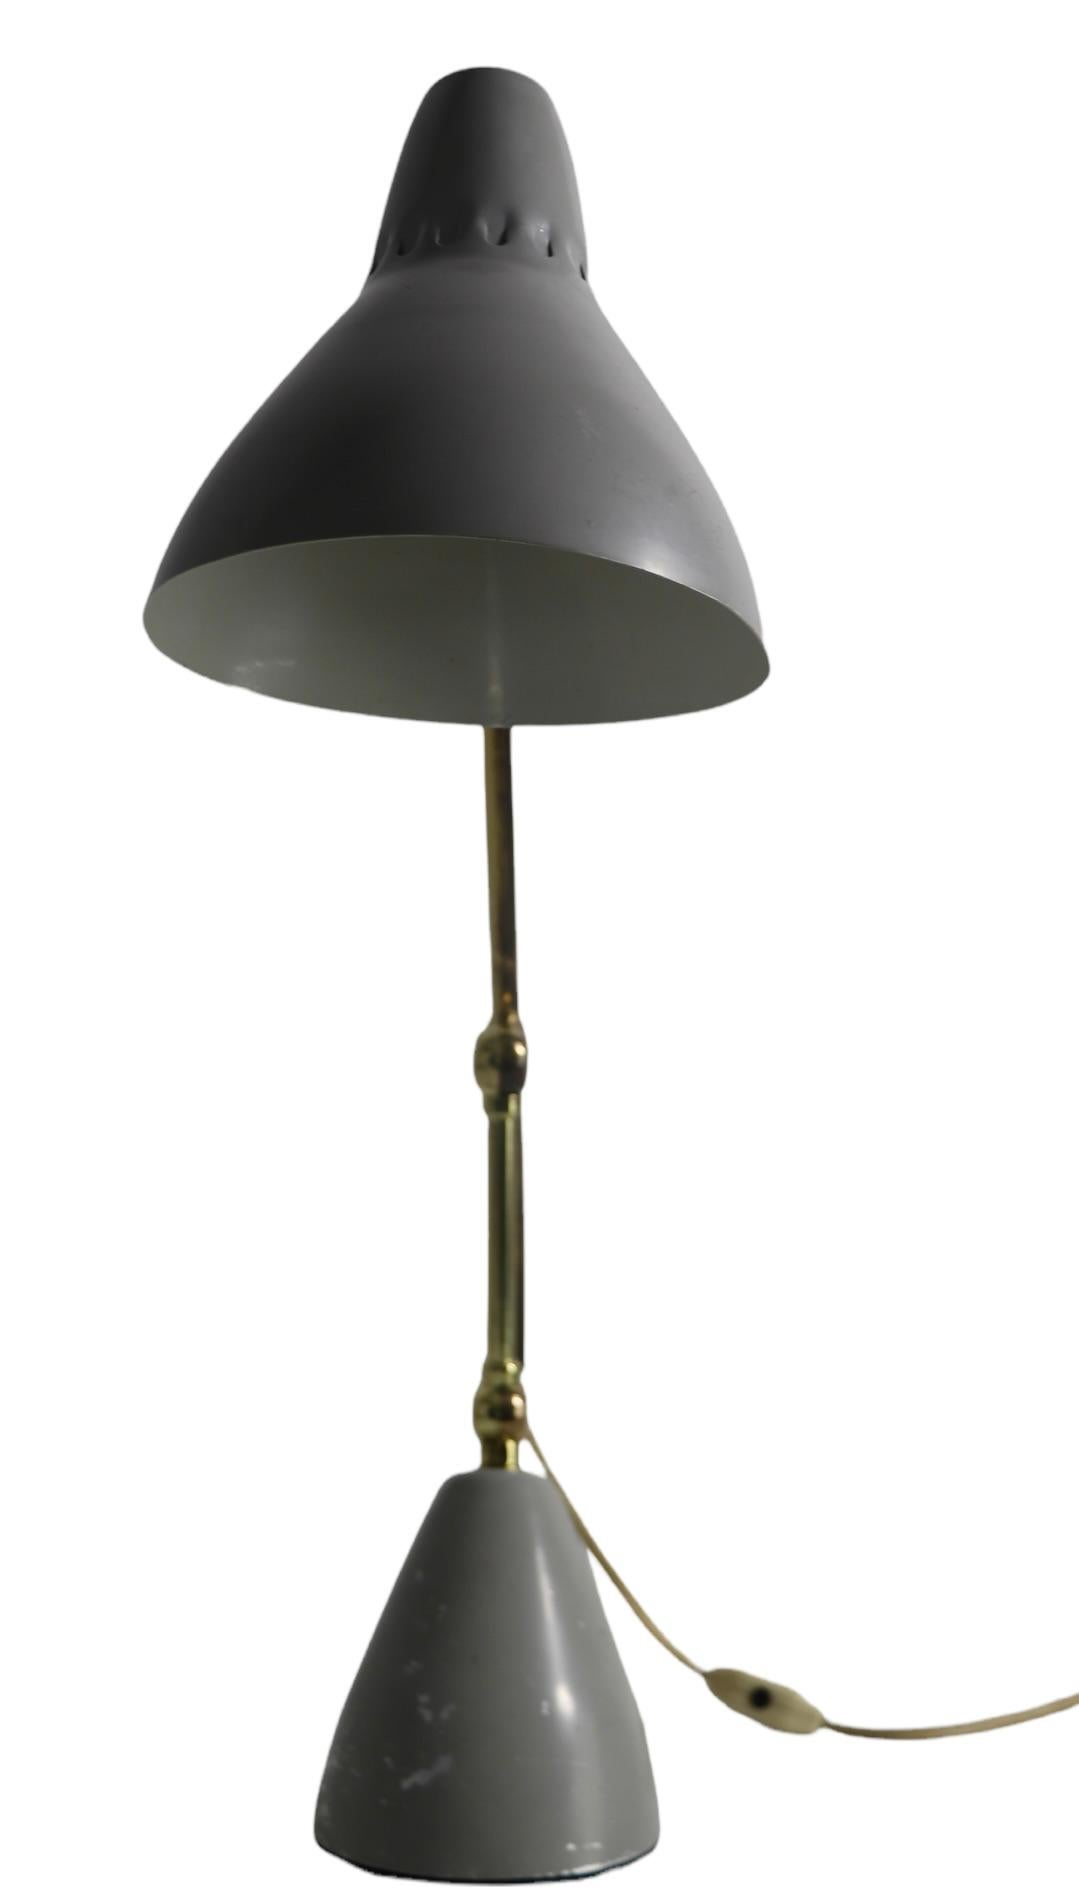 Adjustable Mid Century Desk Lamp Possibly German or Italian in Origin 3